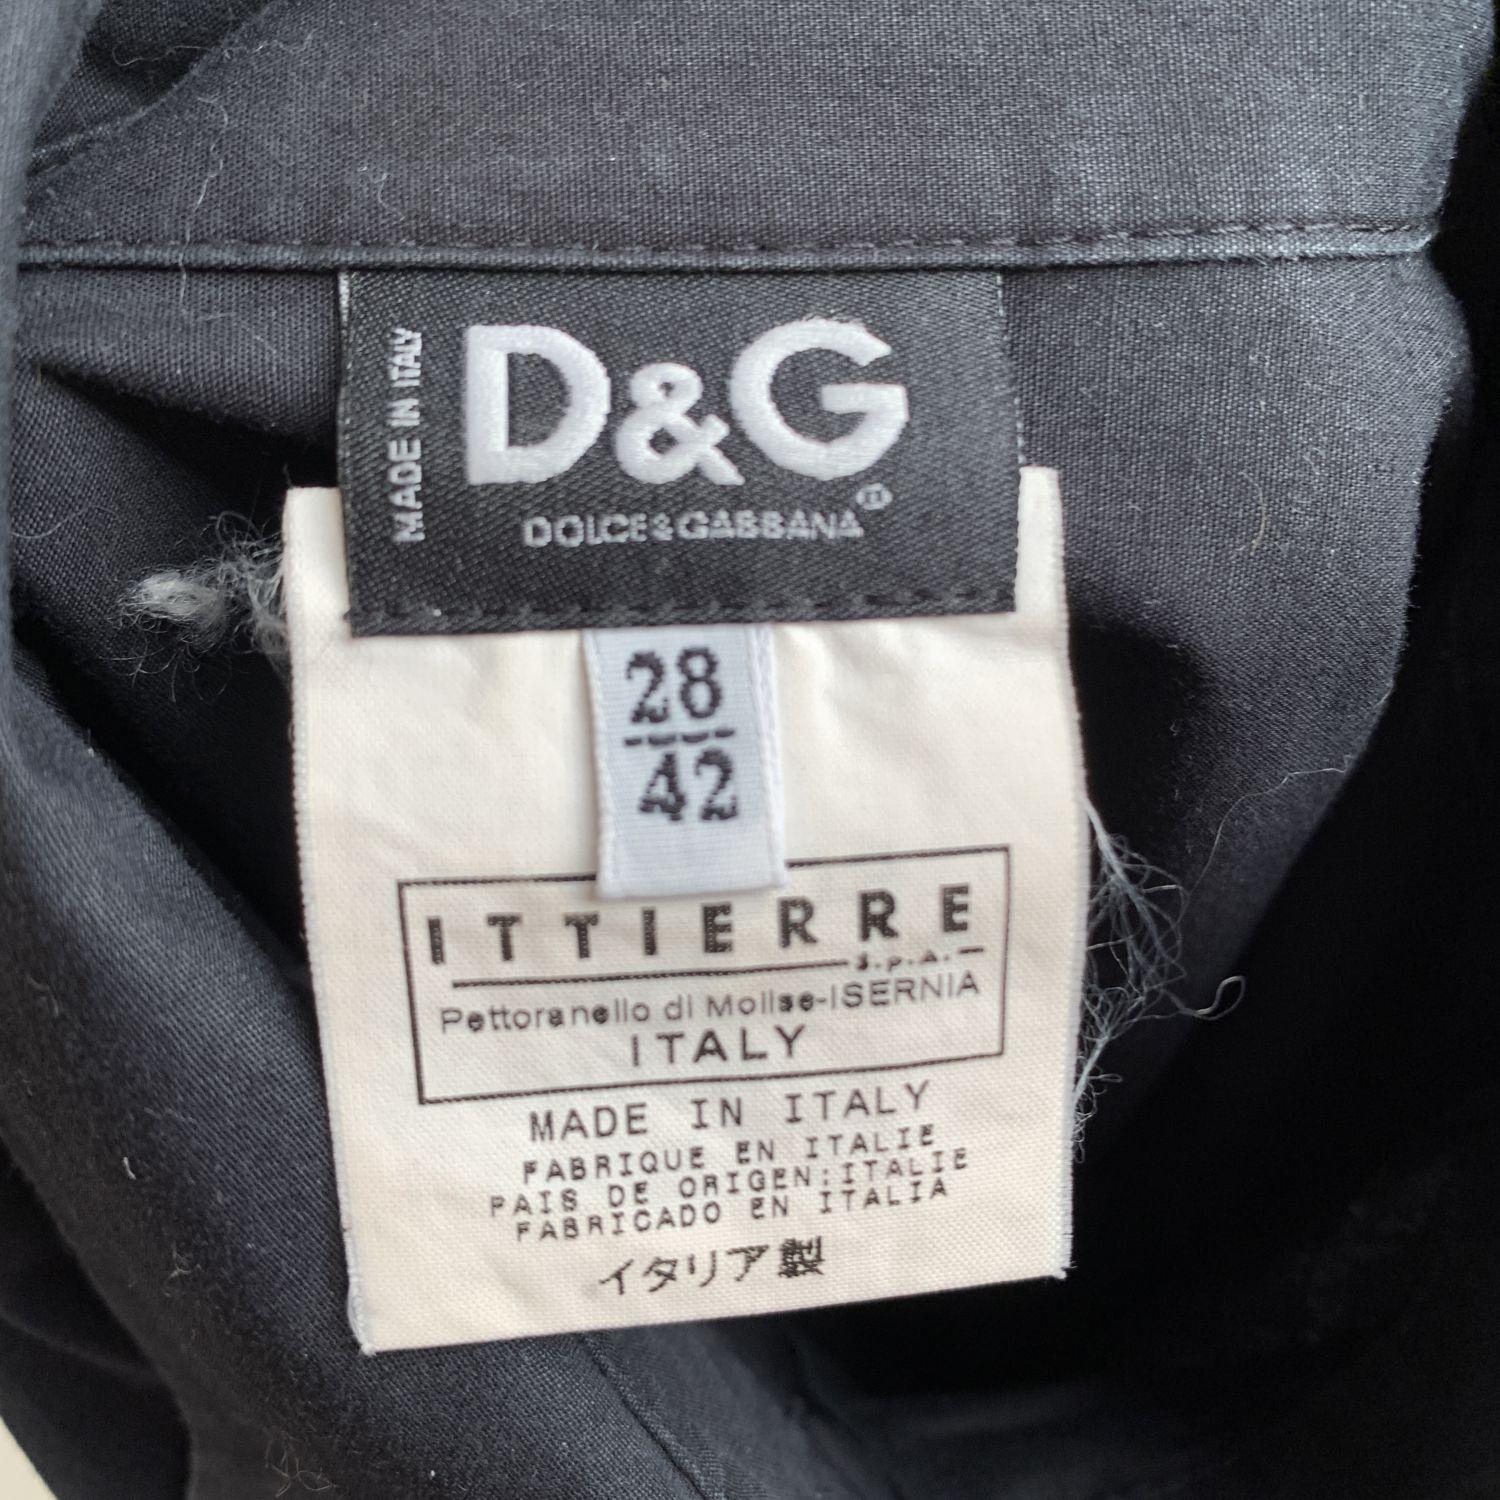 D&G Dolce & Gabbana Black Shirt Dress with Braces Detailing Size 42 2